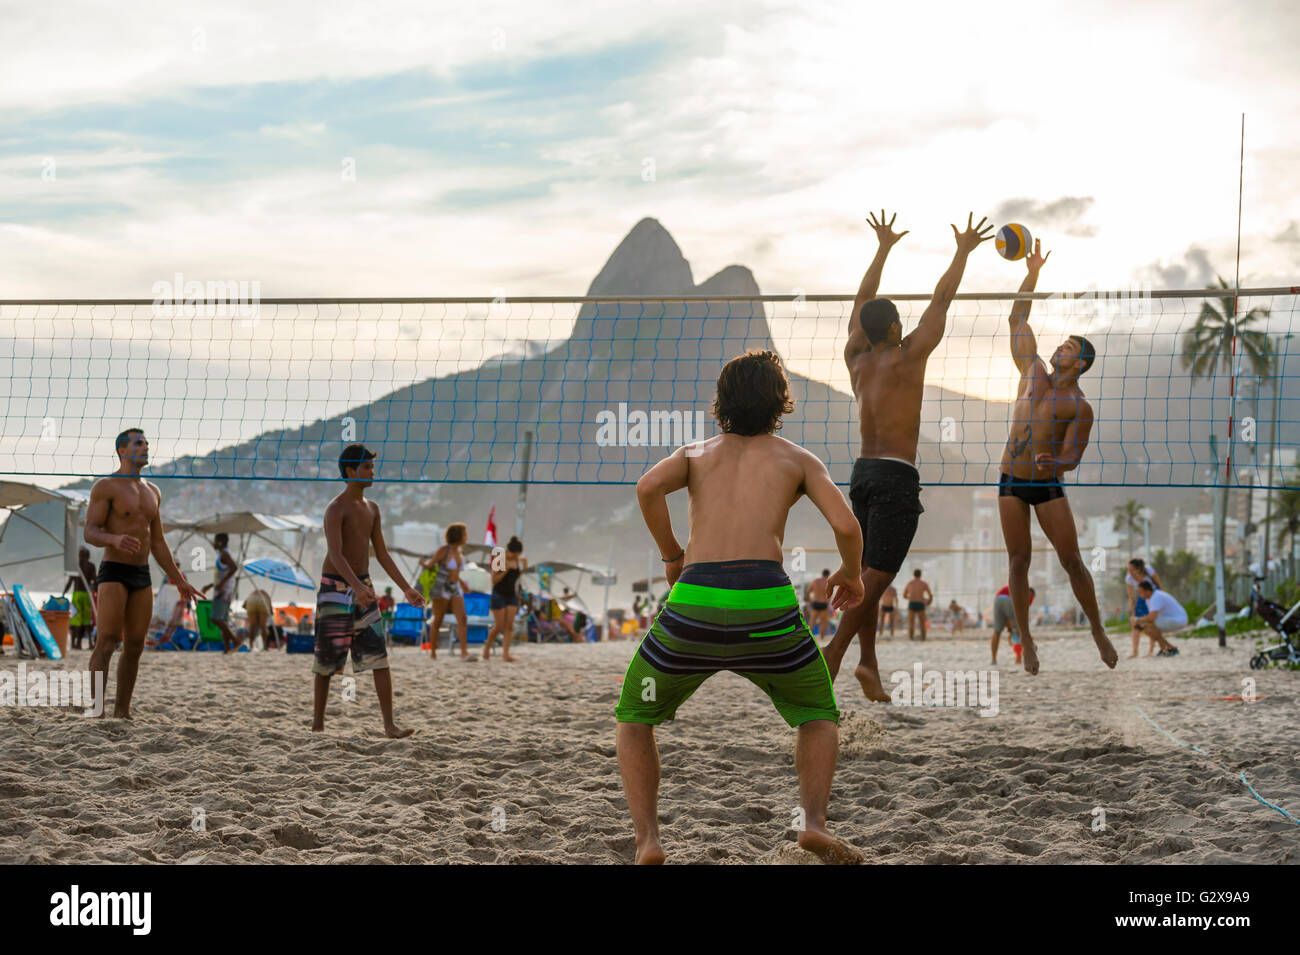 RIO DE JANEIRO - MARCH 27, 2016: Brazilians play futevôlei (footvolley, a sport combining football/soccer and volleyball). Stock Photo